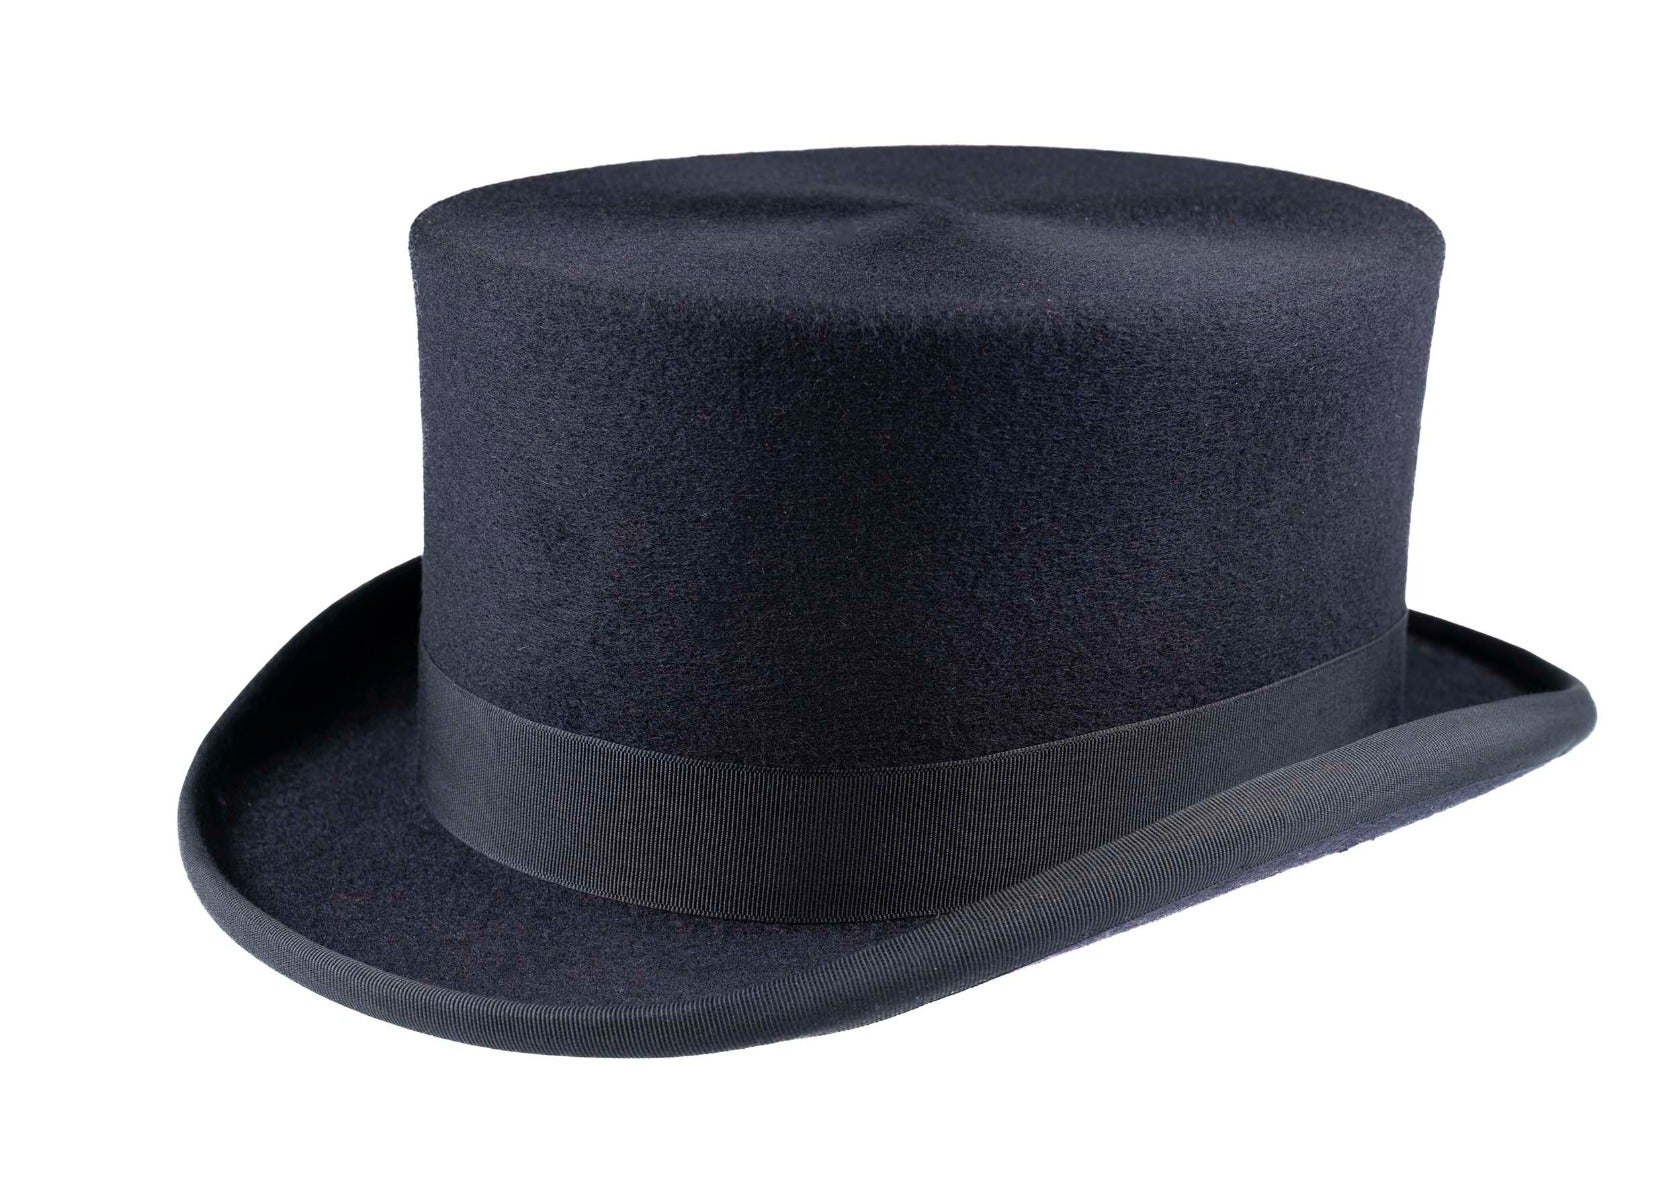 Christys' Wool Top Hat Grey, Buy British